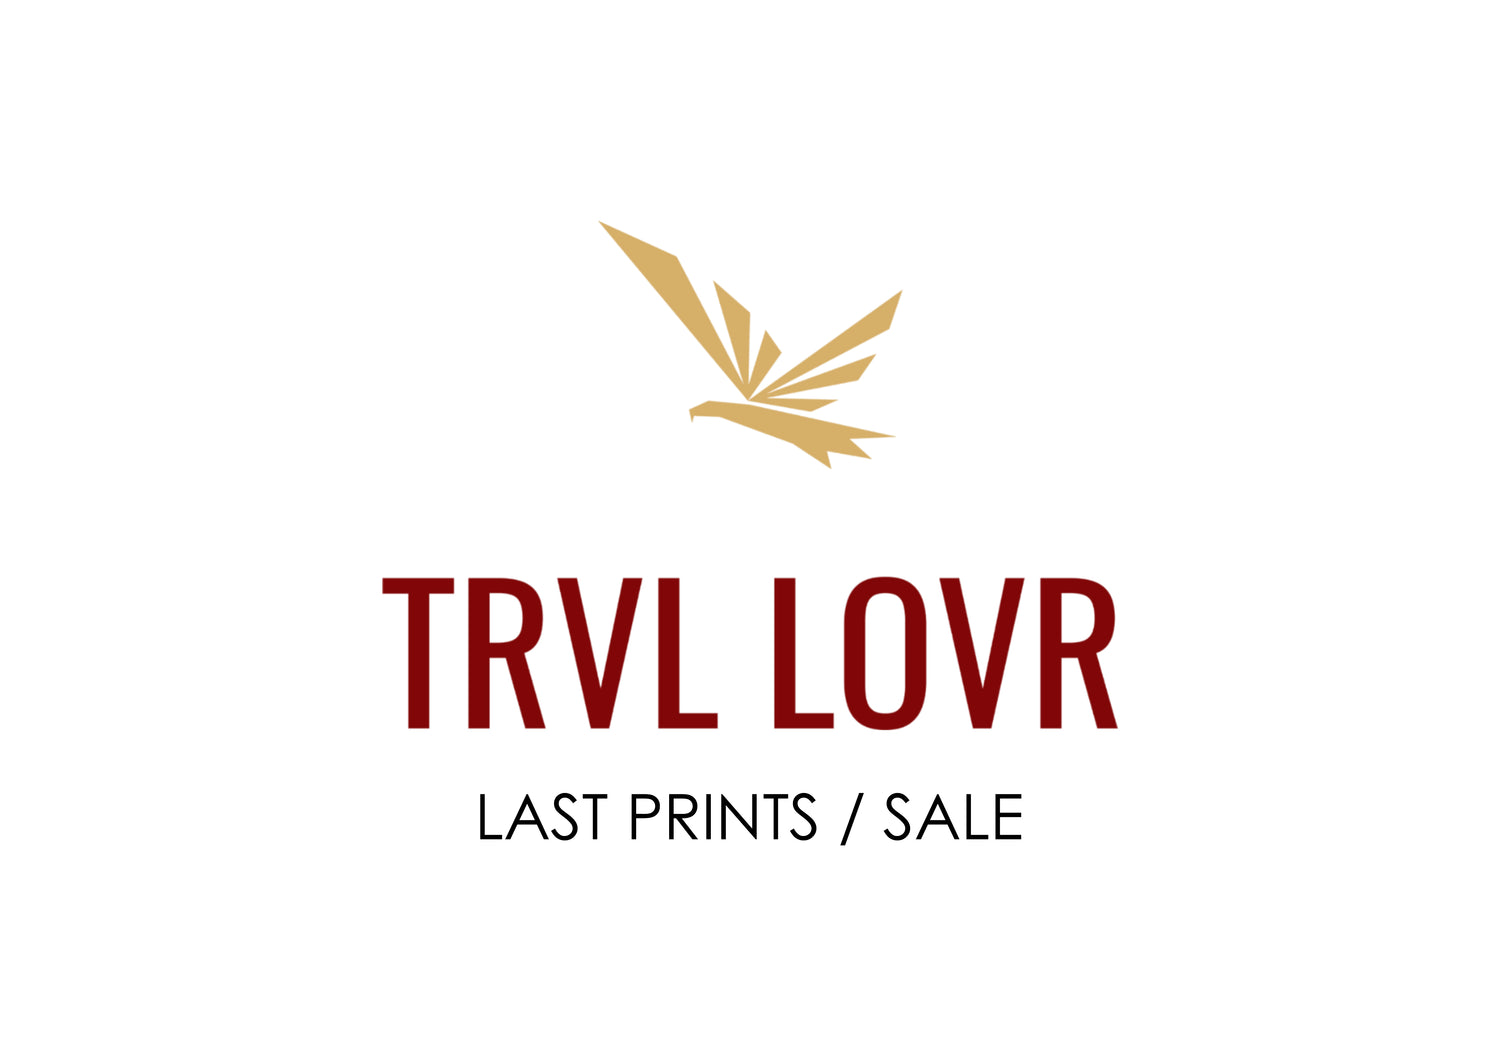 Last Prints / Sale